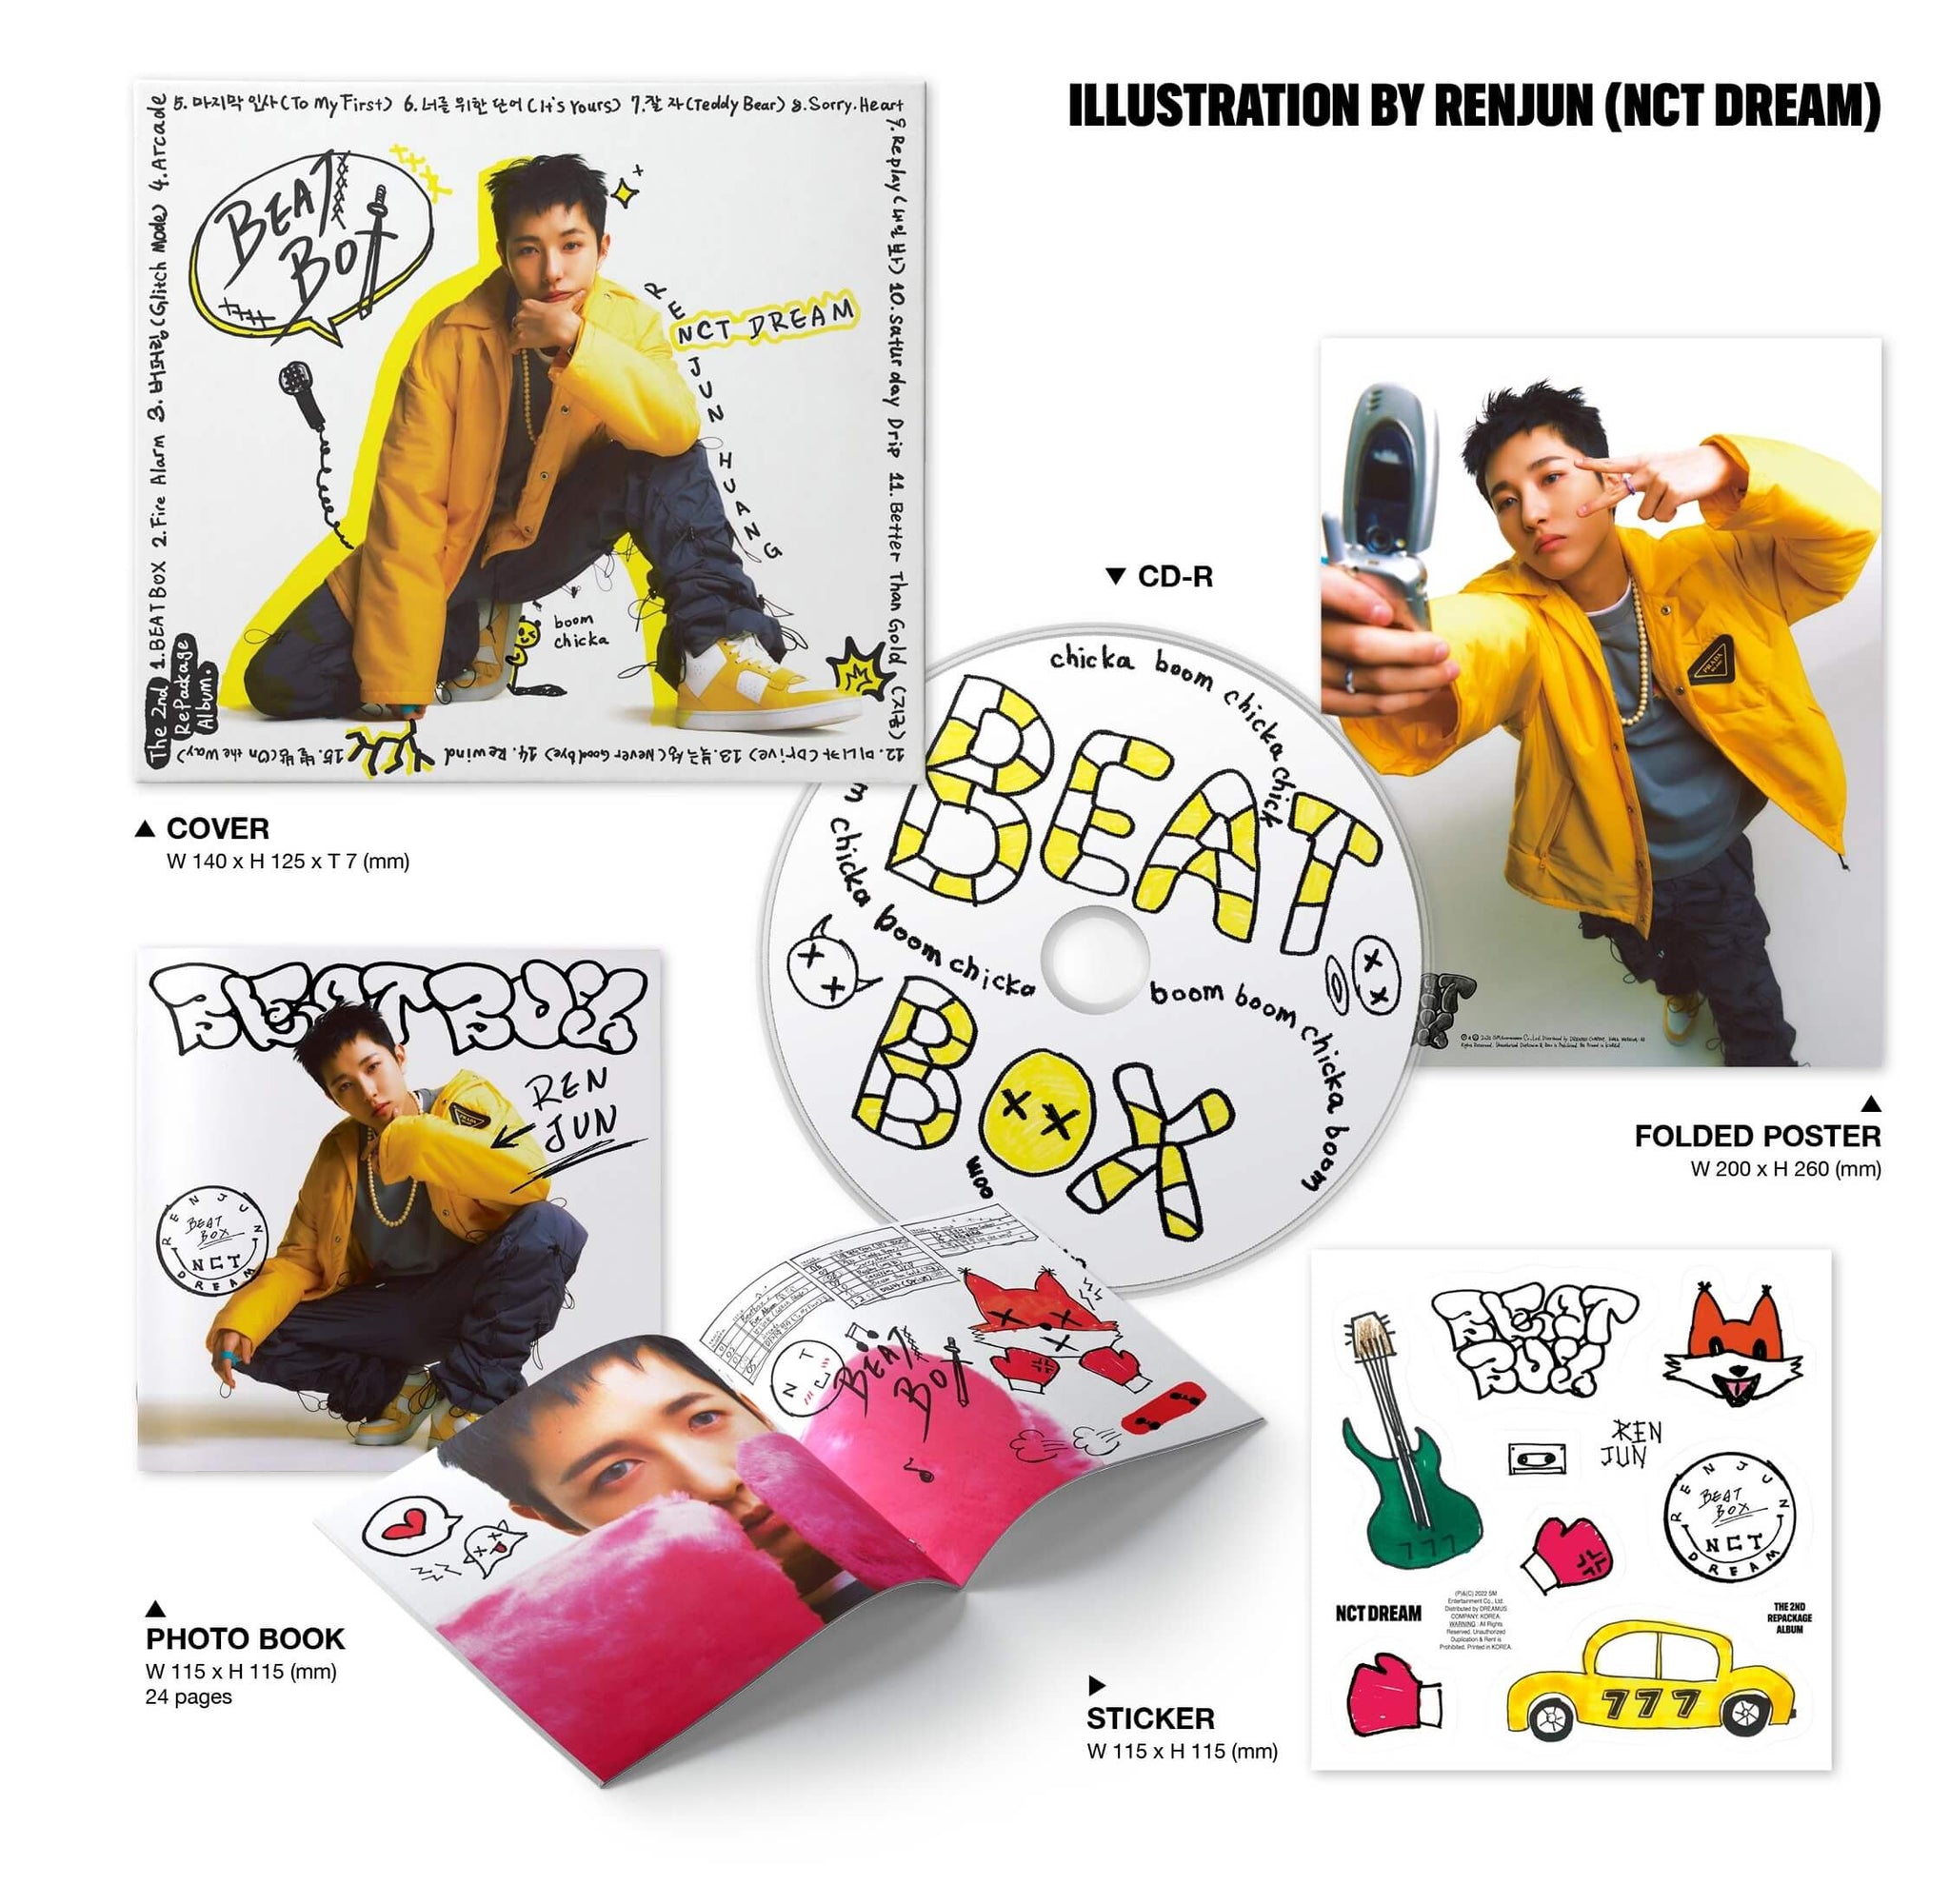 NCT DREAM Repackage Beatbox - Digipack Version RENJUN Ver. Inclusions Cover Photobook Sticker CD Folded Poster